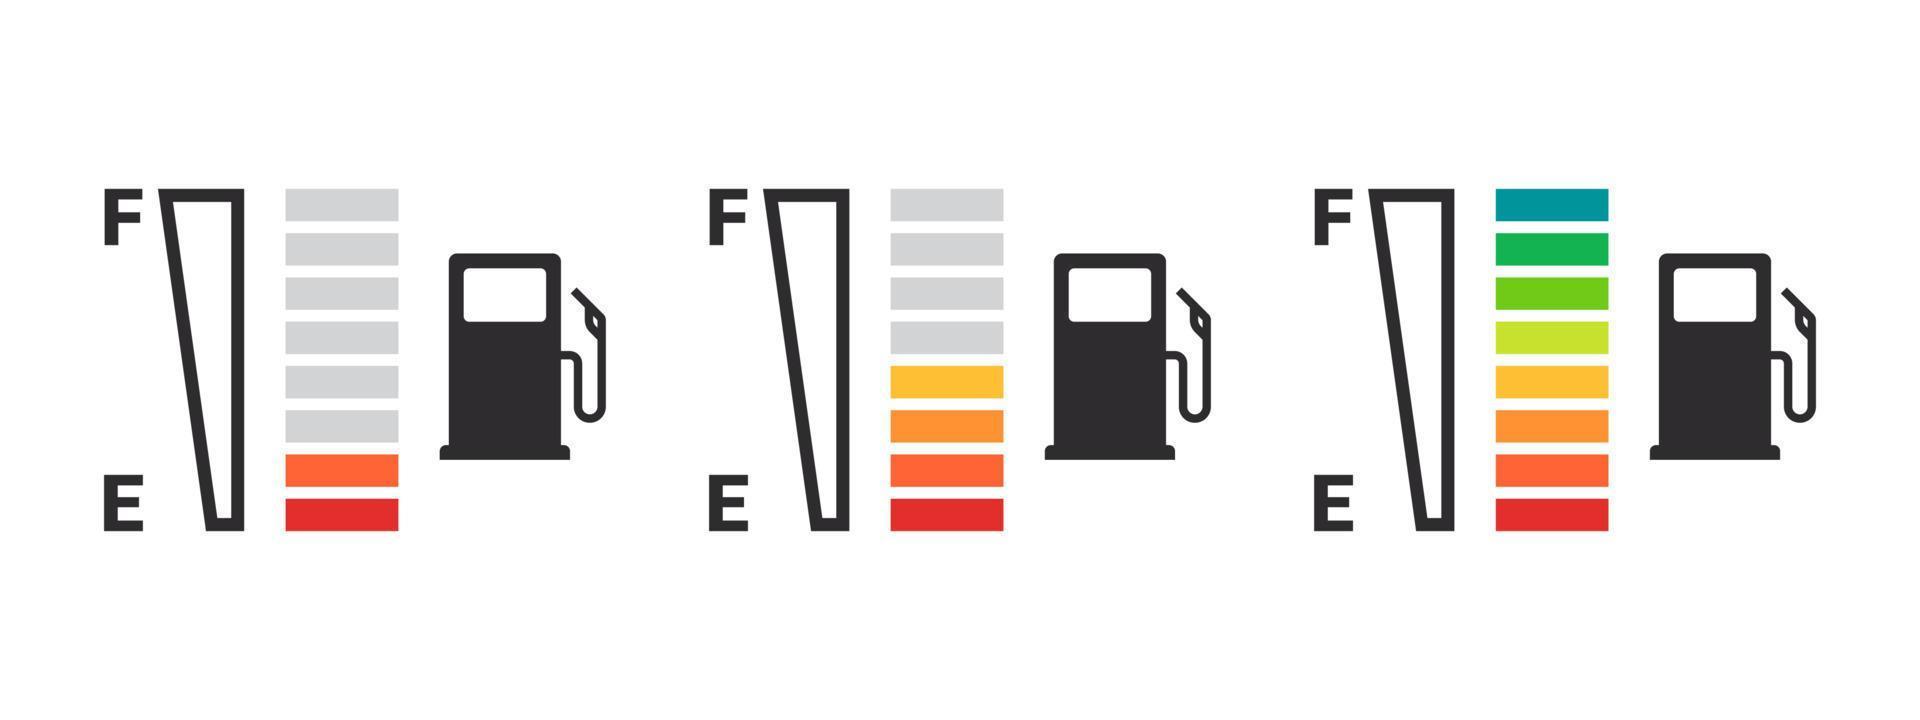 auto carburante valutare icone. benzina indicatore. carburante indicatore concetto. vettore immagini